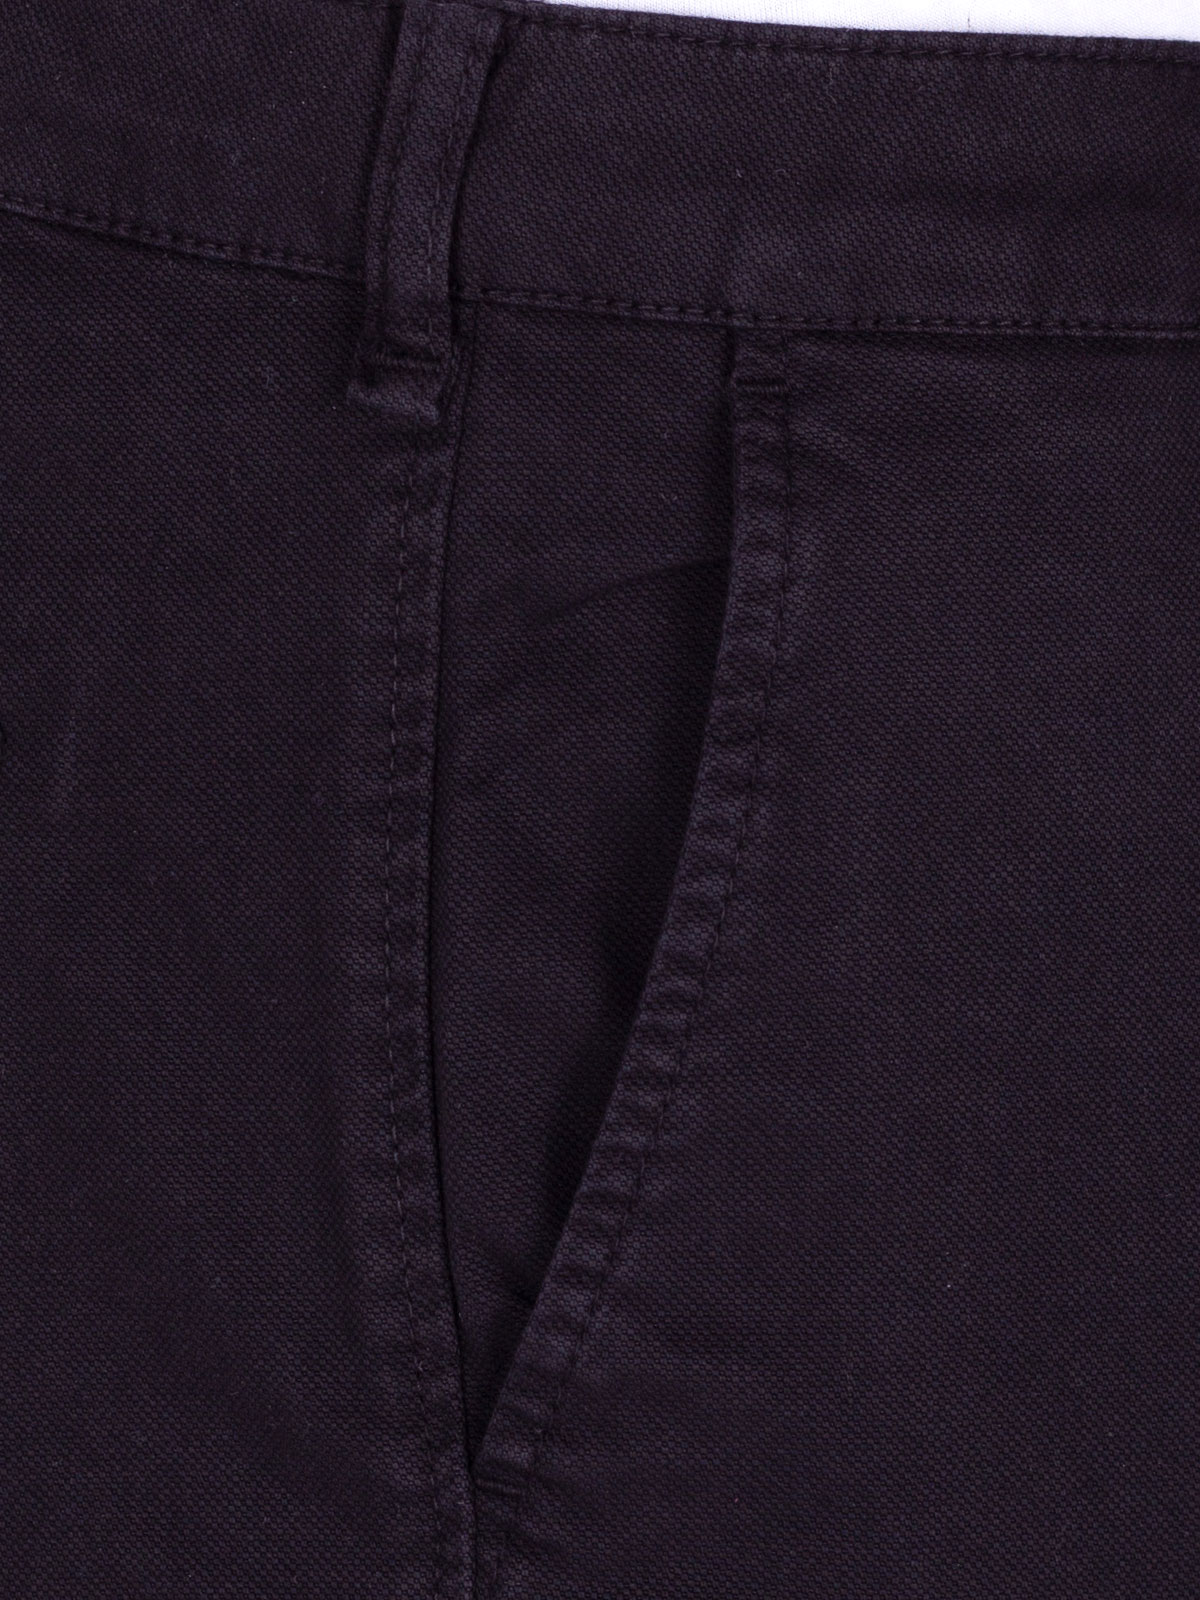 Pantaloni negri structurați - 60281 € 49.49 img2